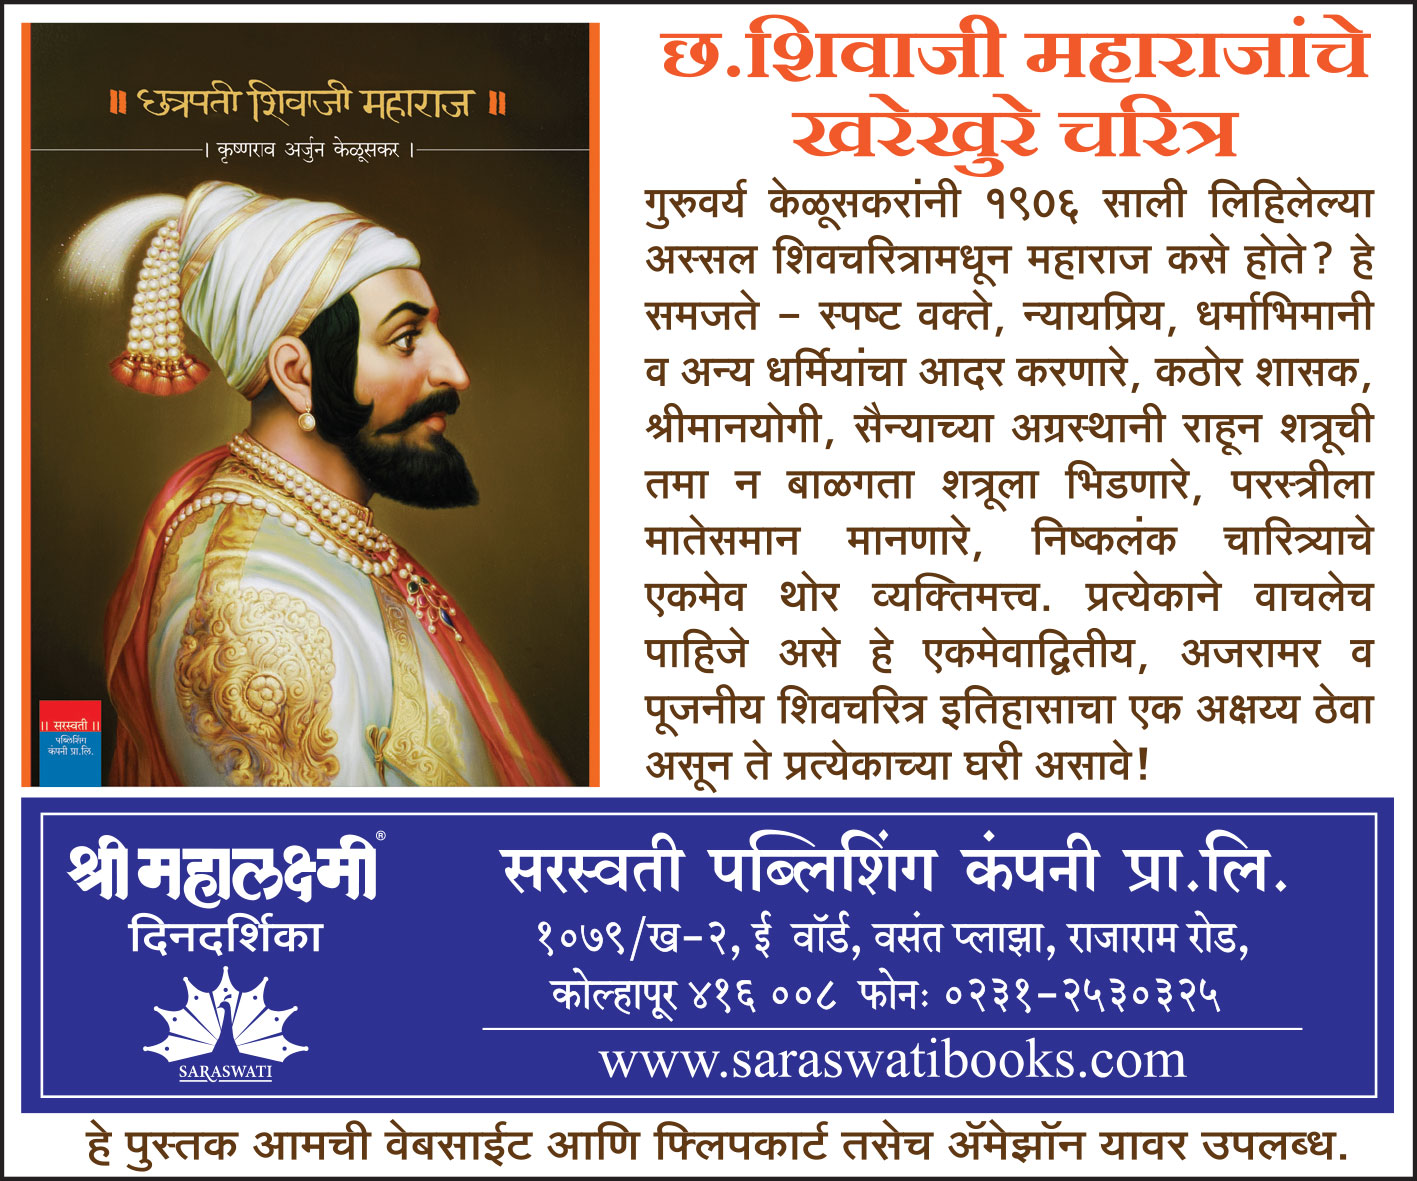 dagalbaj shivaji book pdf download